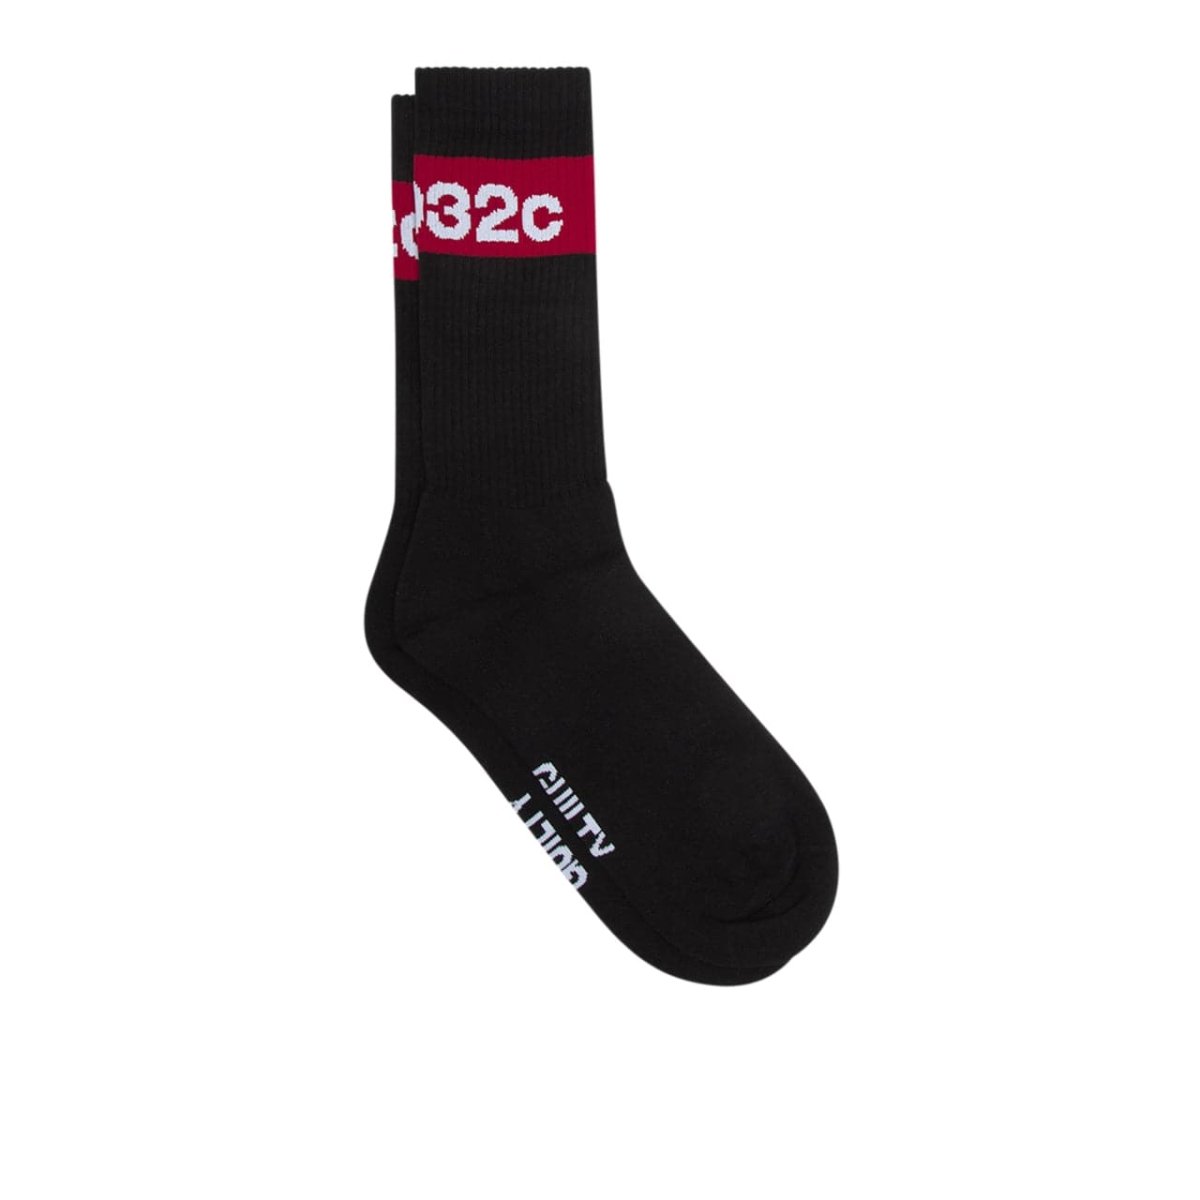 Image of 032c Tape Socks (Black)